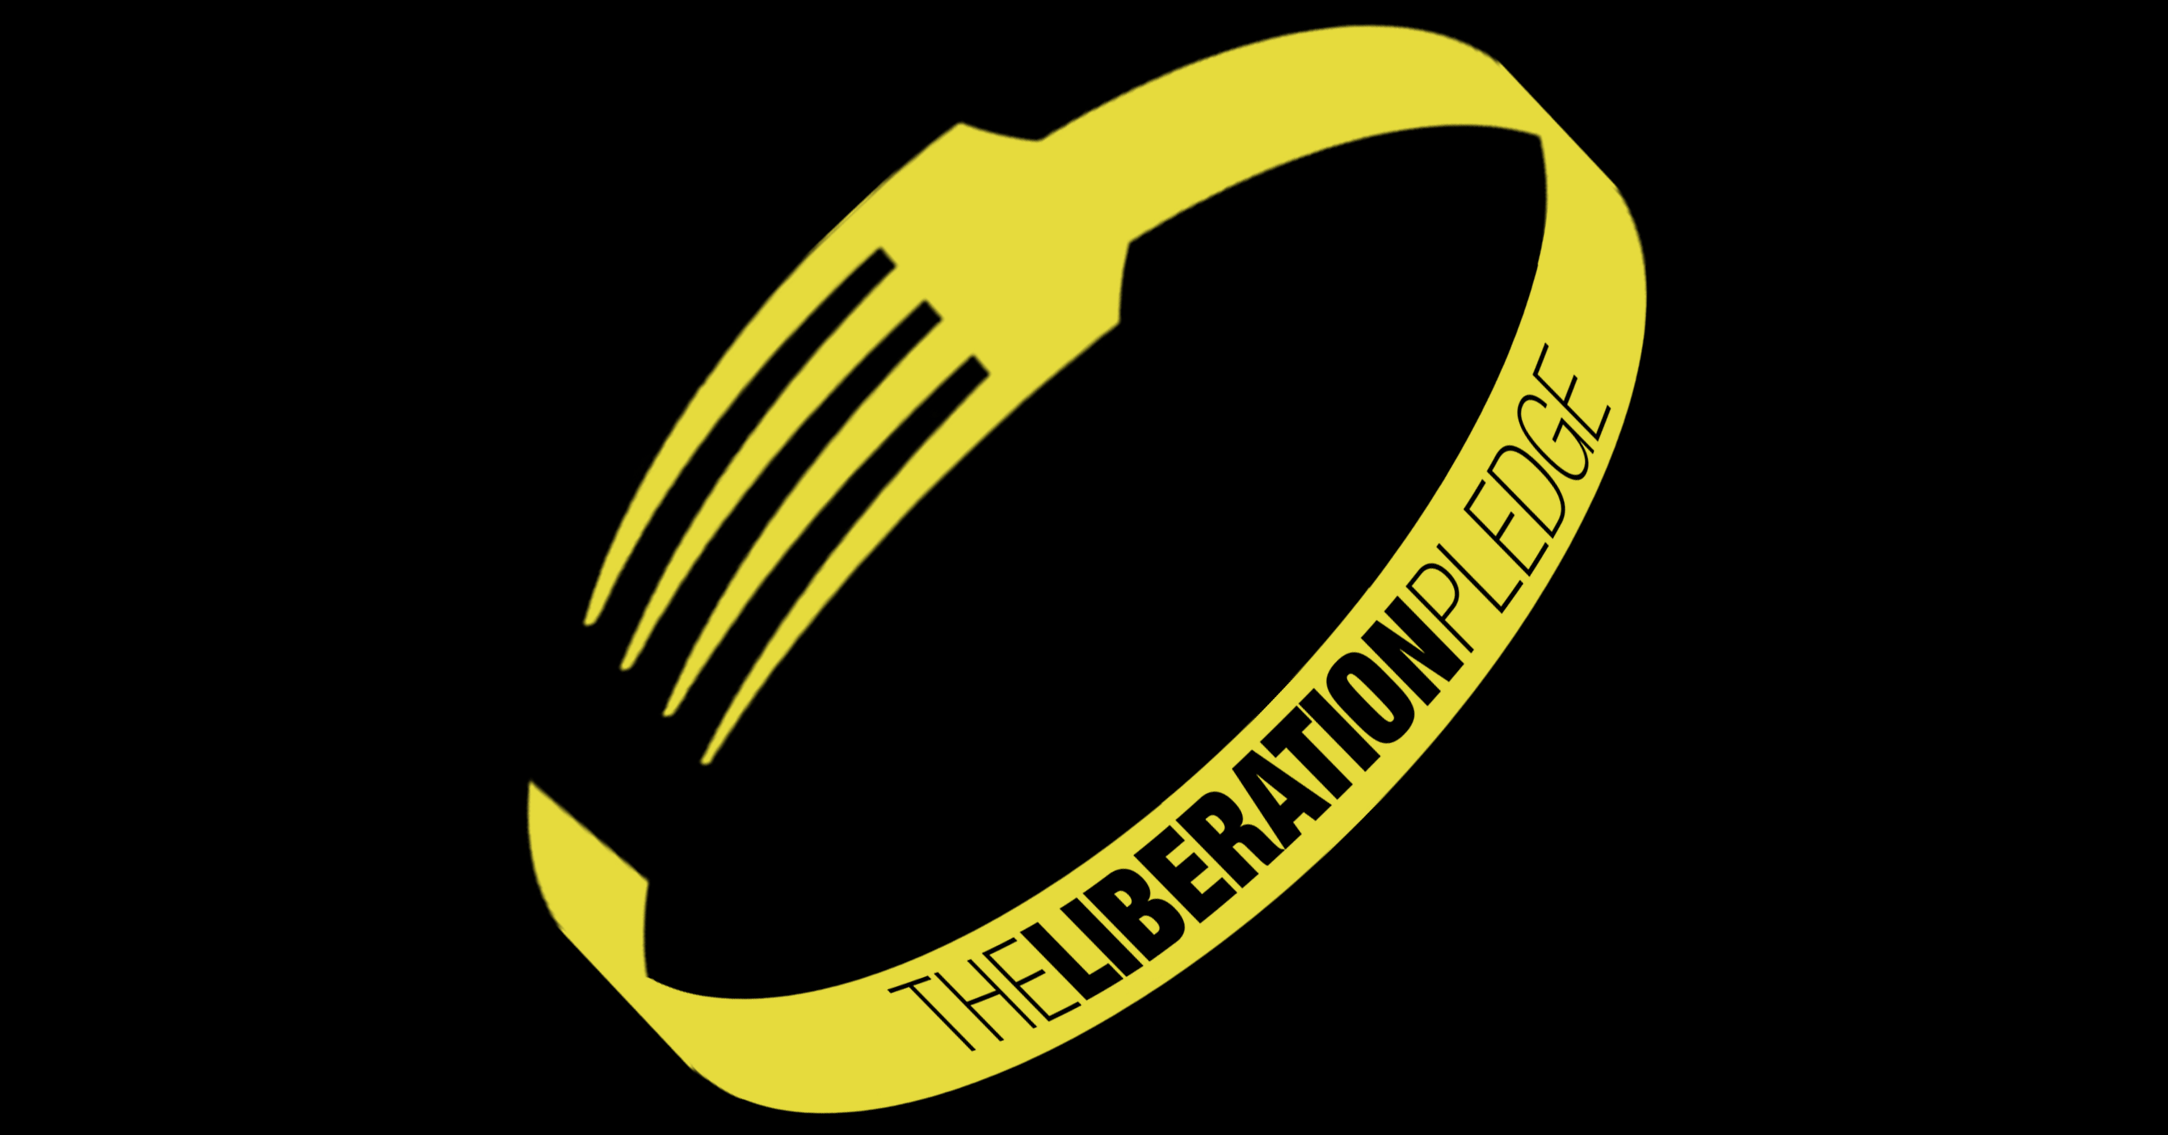 The Liberation Pledge